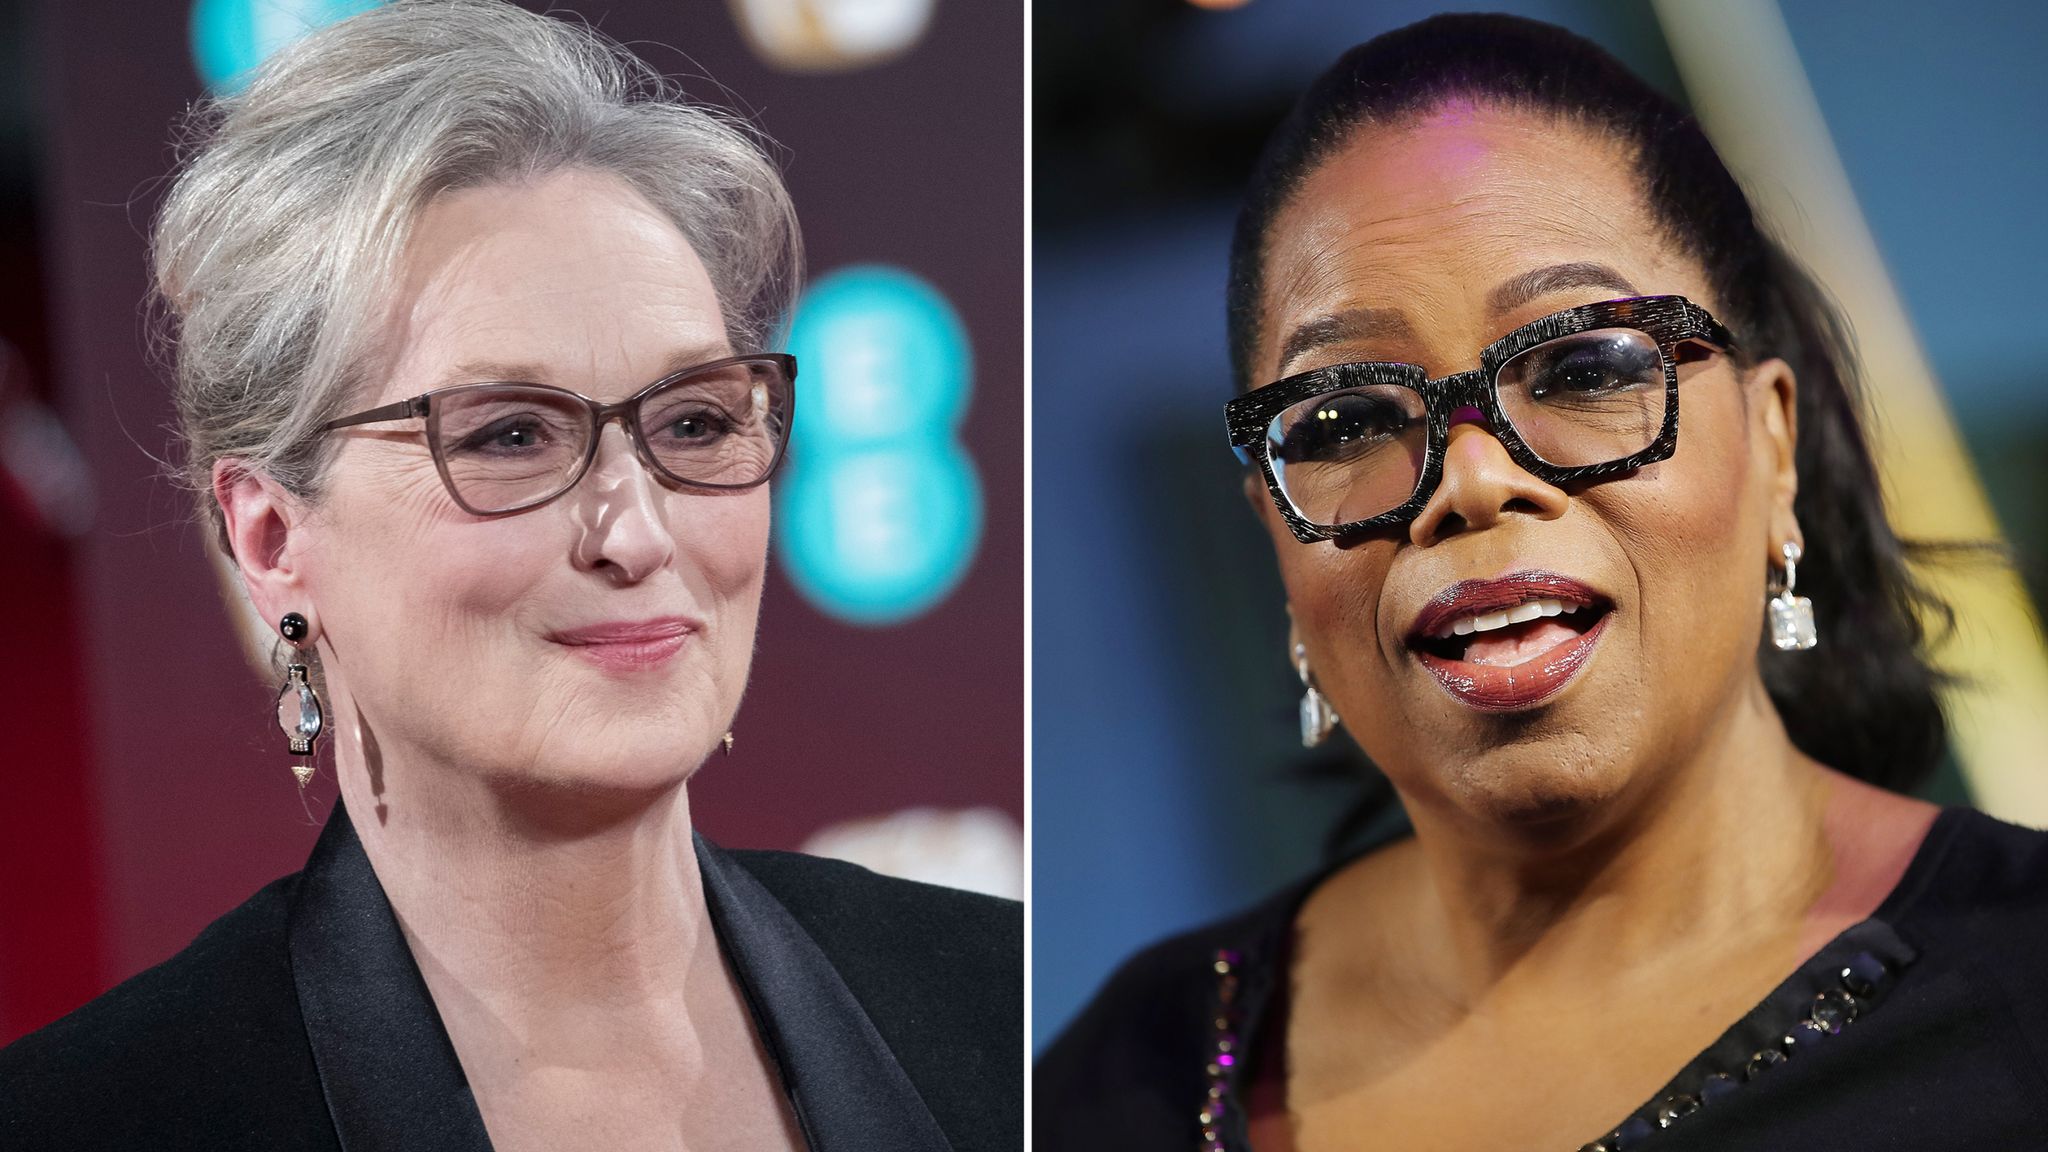 Oprah Winfrey and Meryl Streep putting world leaders 'on notice' over ...